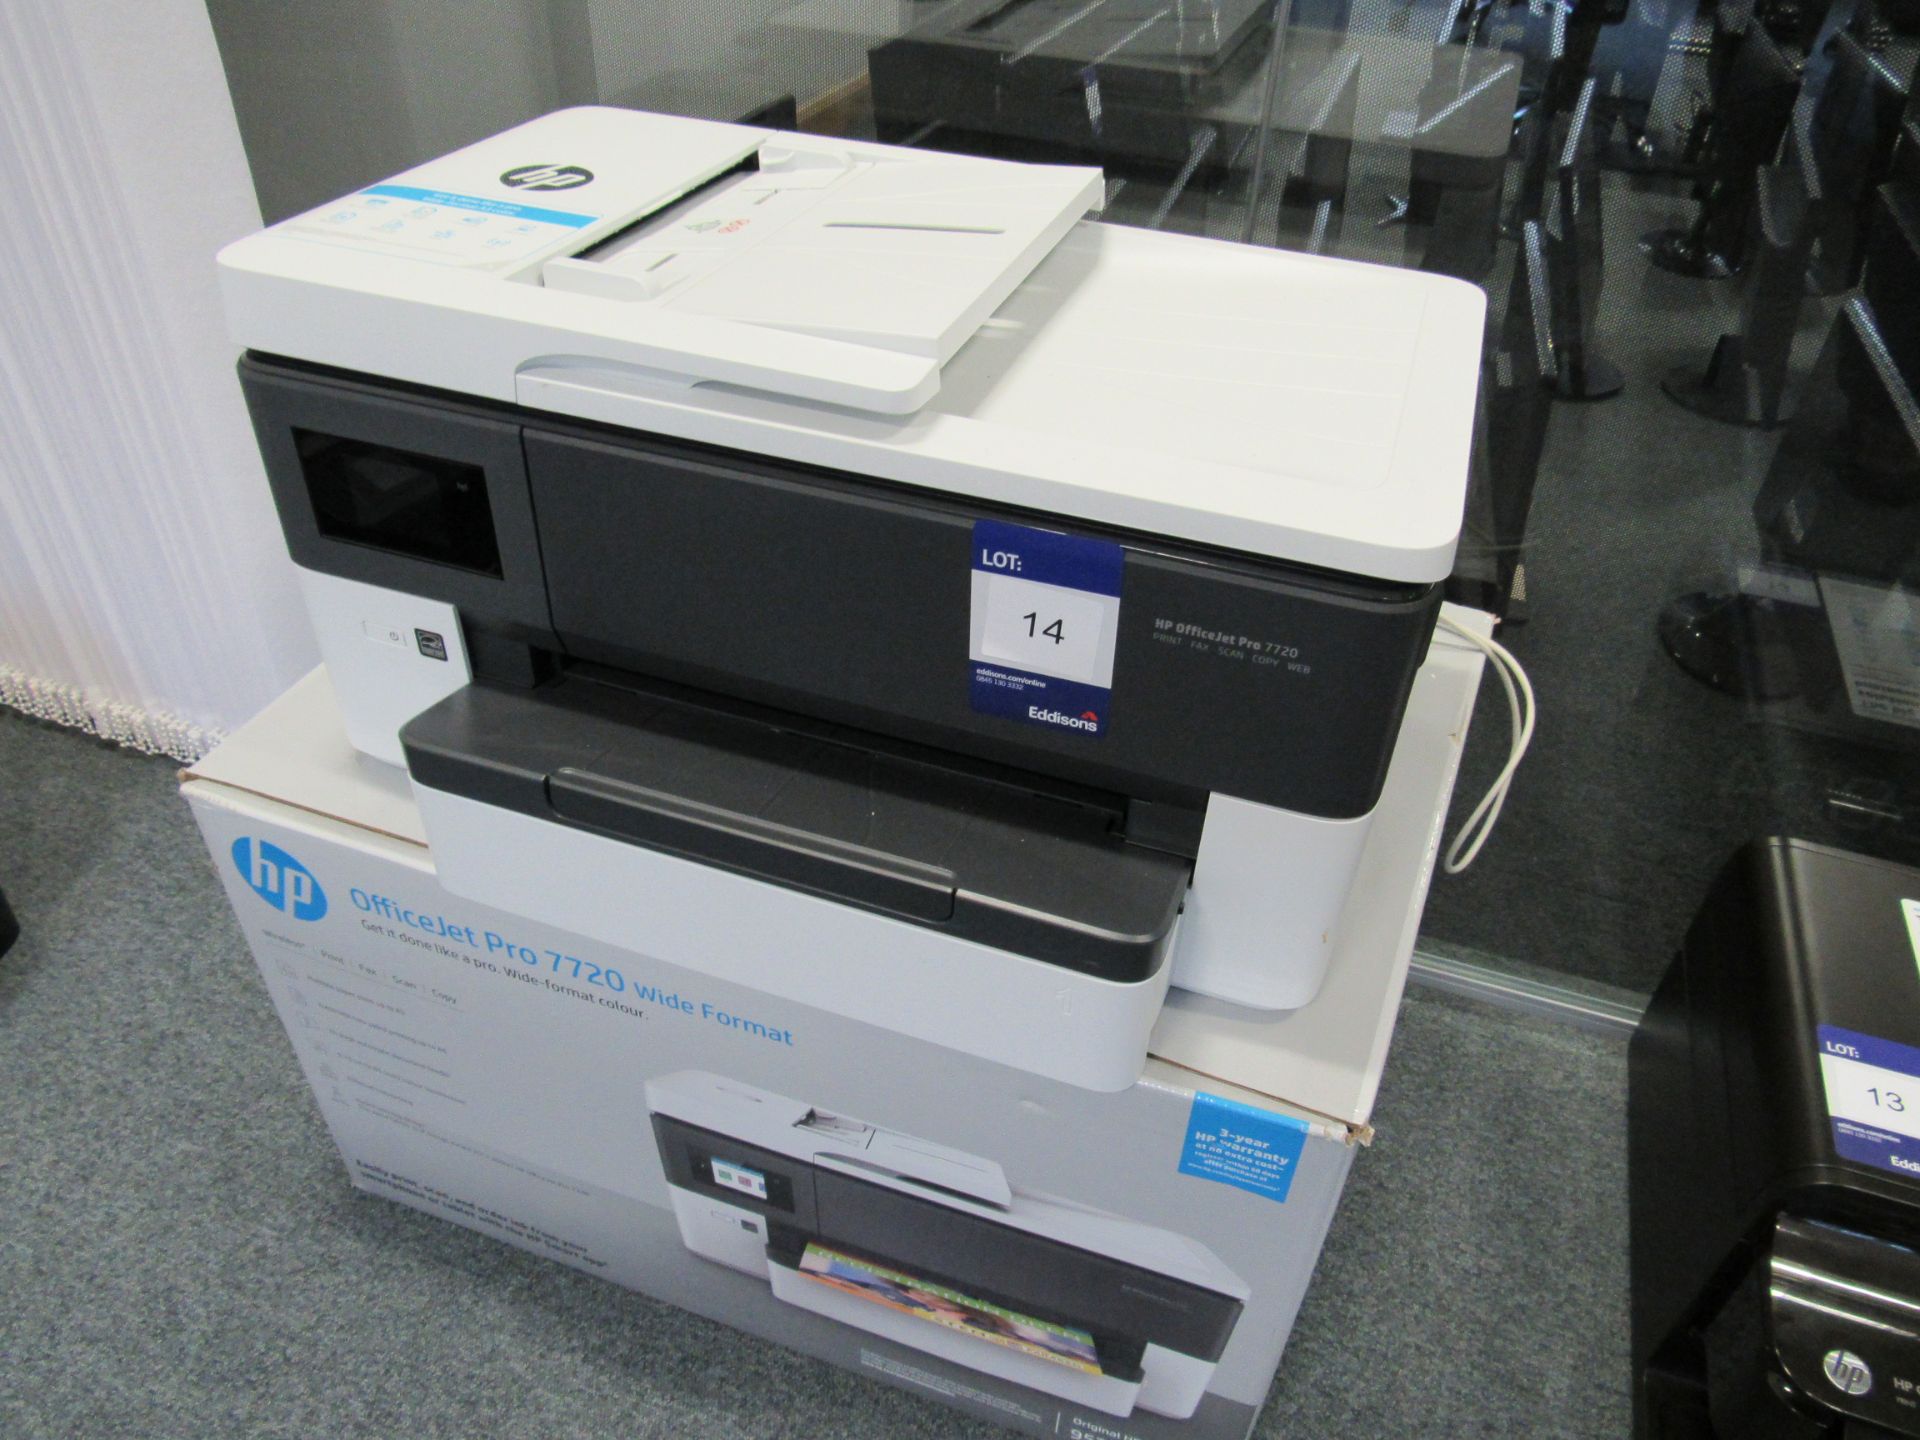 HP Officejet Pro7720 Wide Format All in One Print/Fax/Scan/Copier